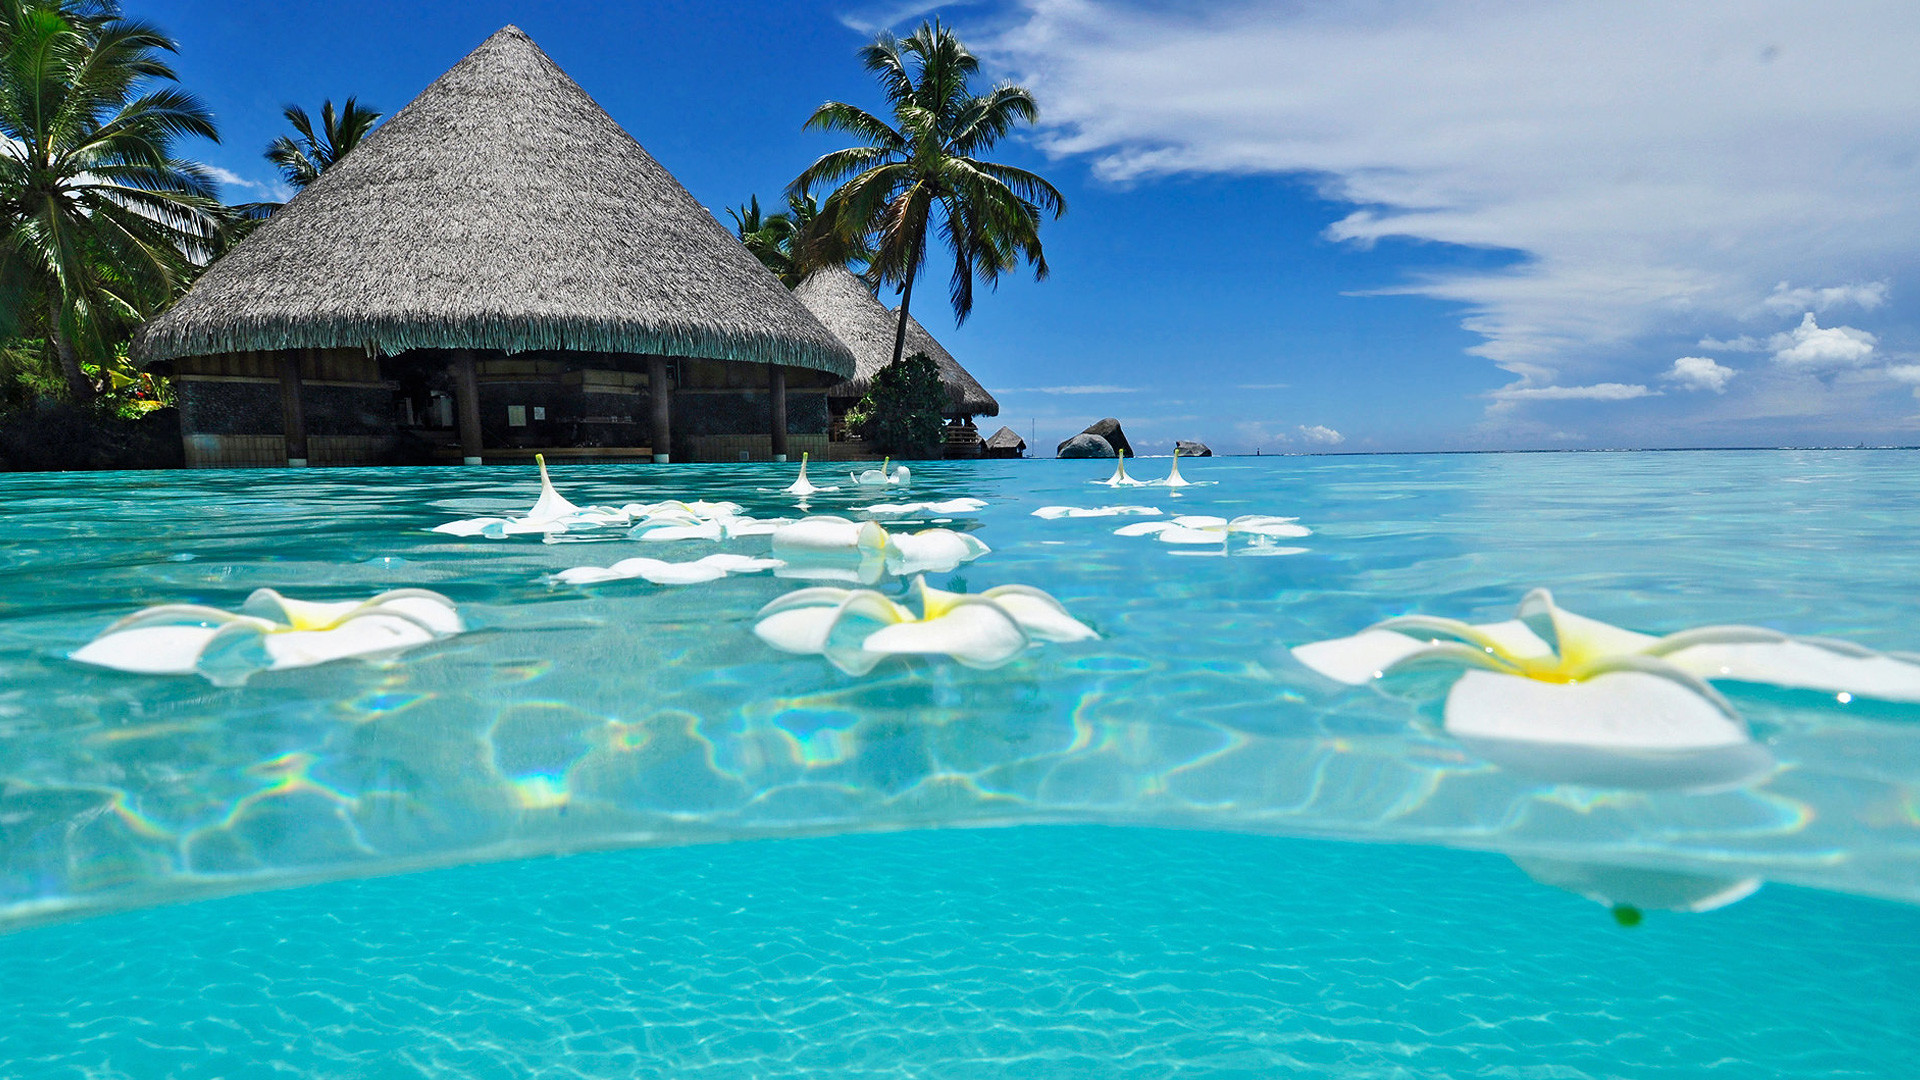 HD Beach Desktop Background Image